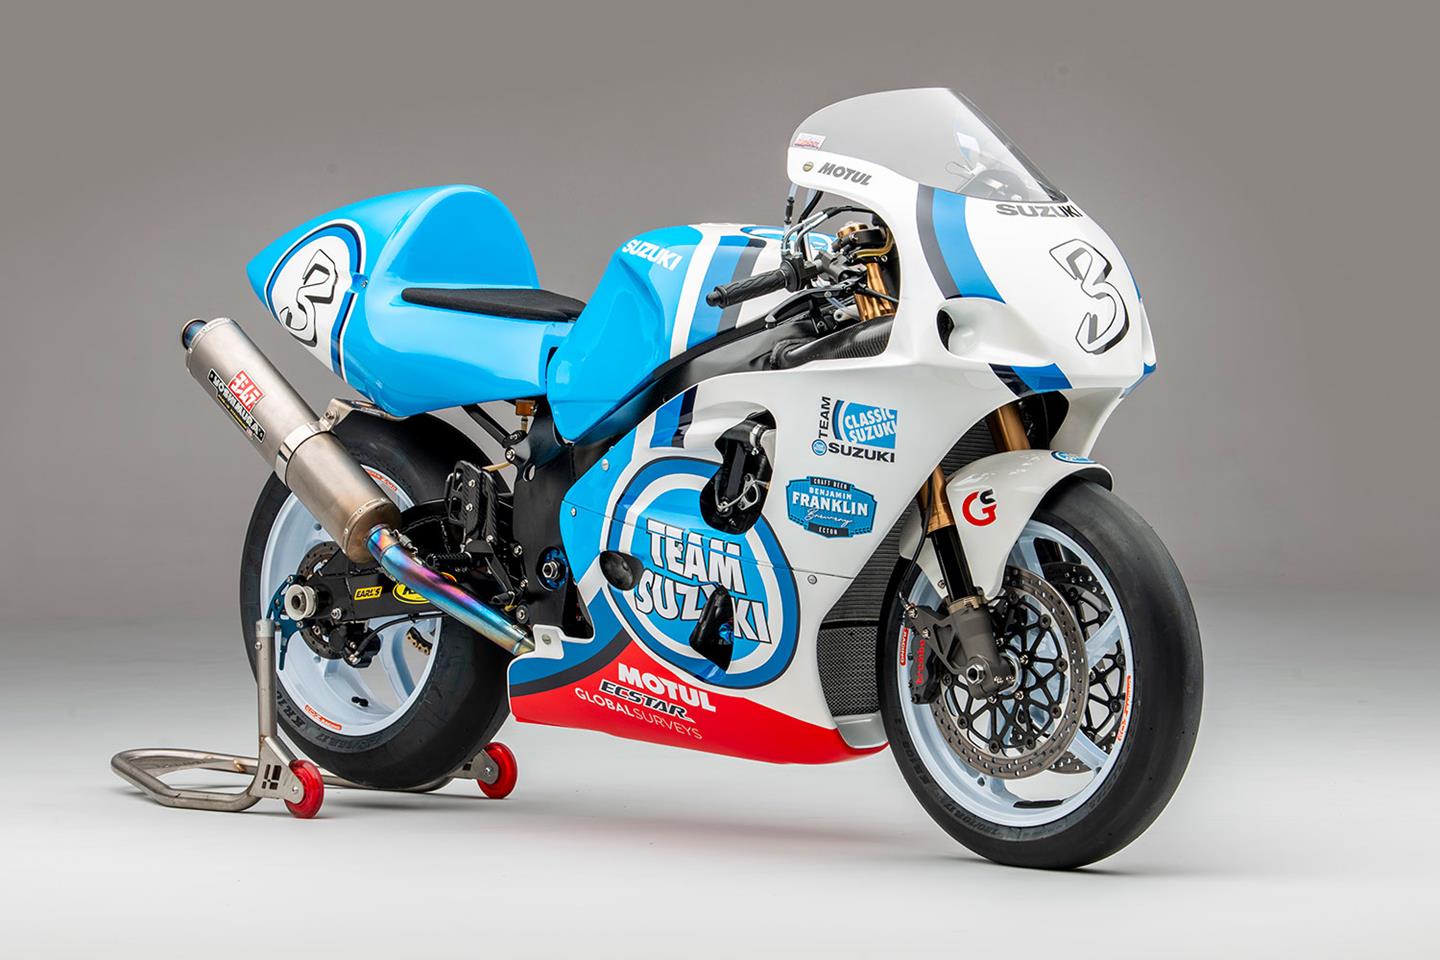 Team Classic Suzuki to campaign GSX-R750 SRAD racer